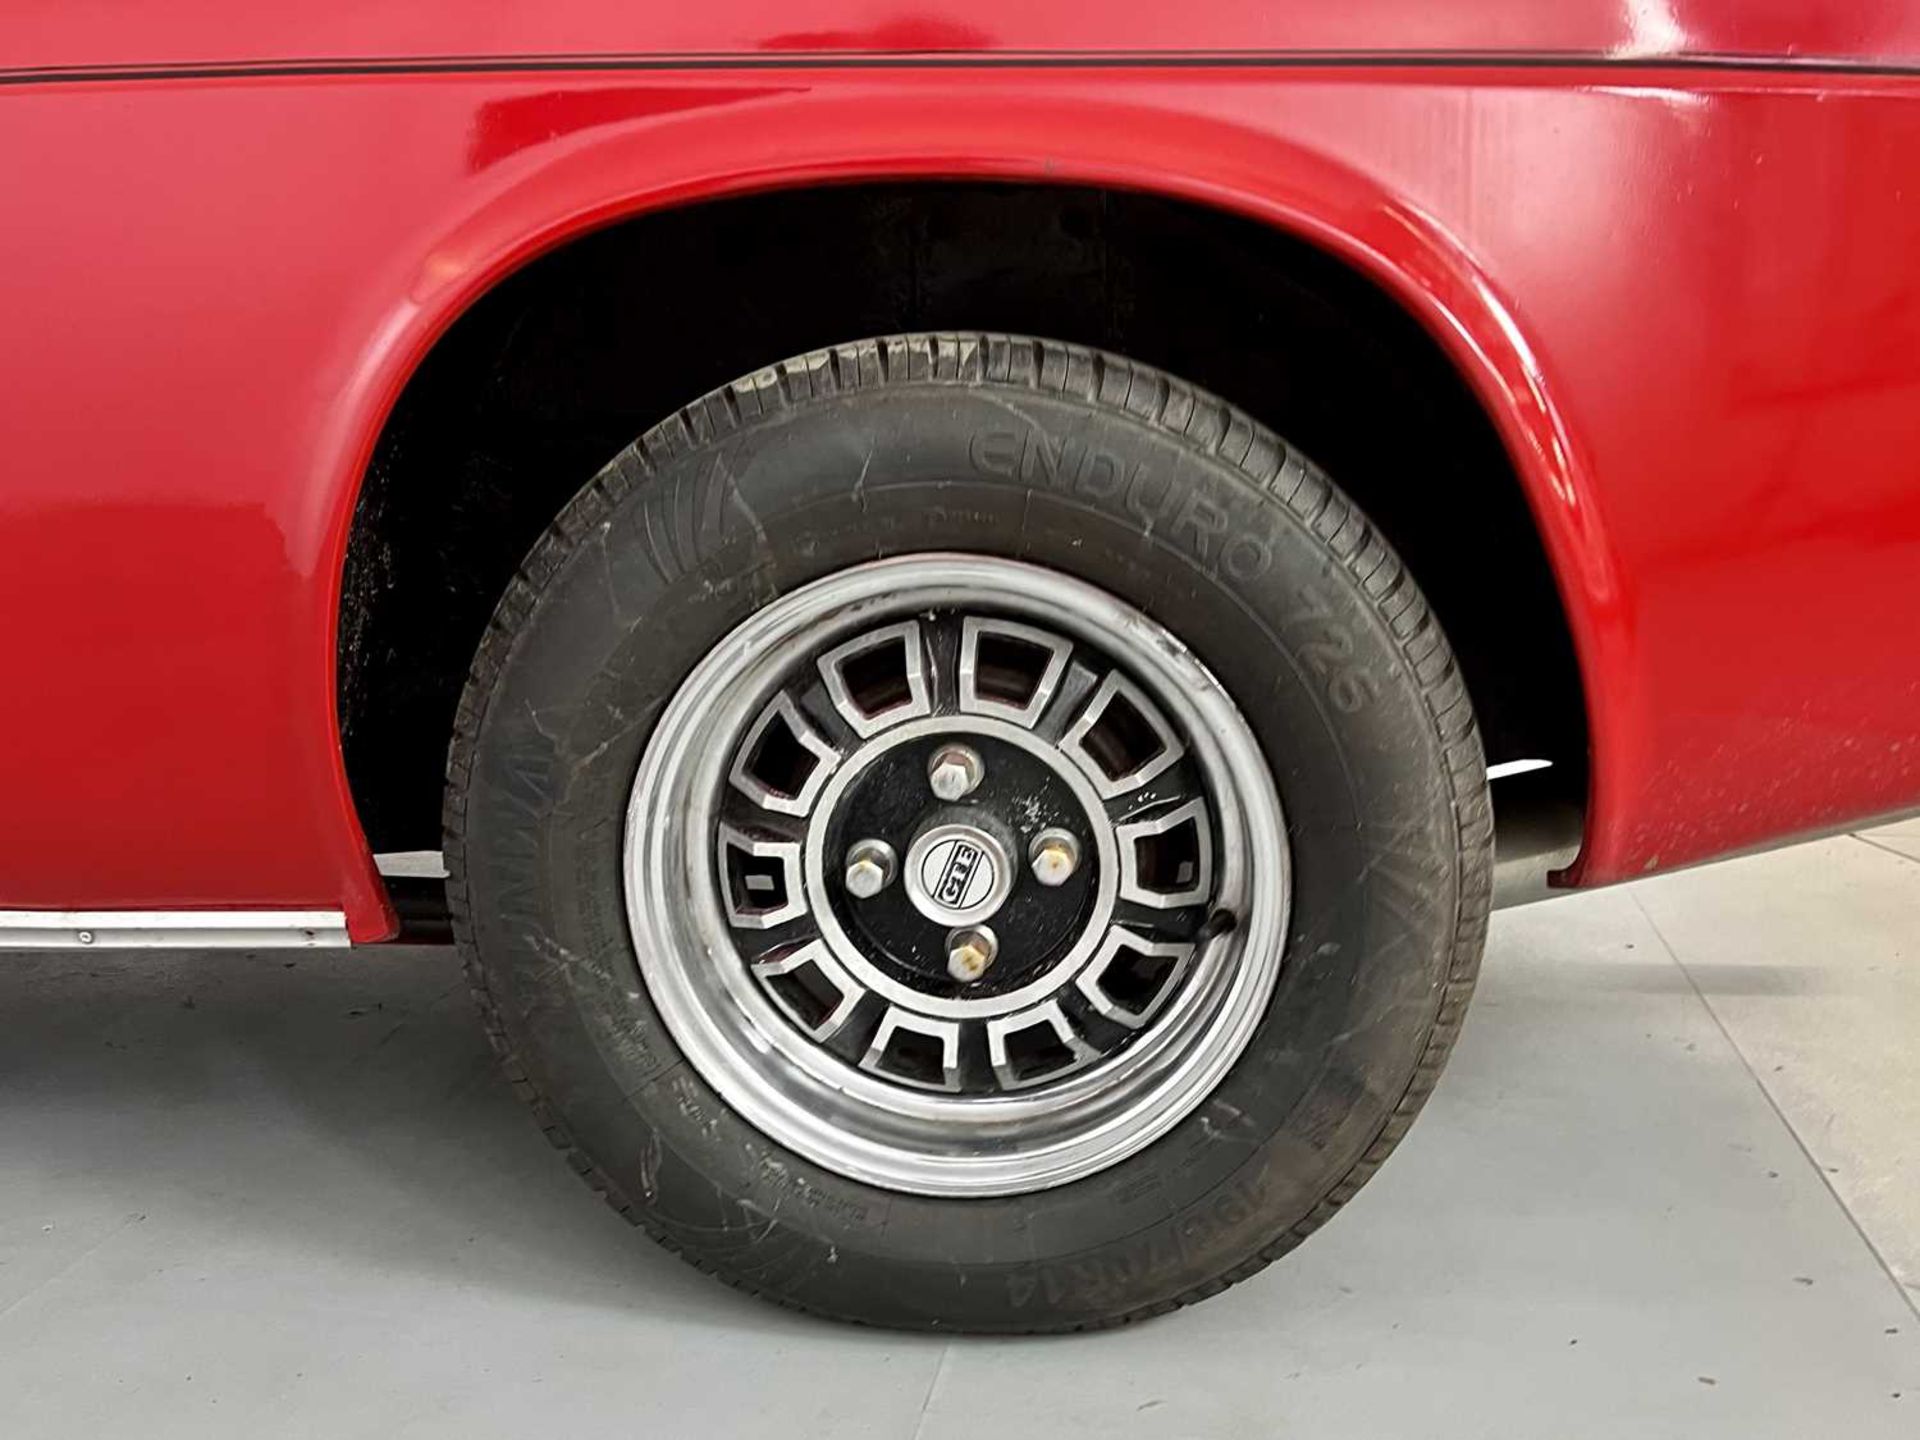 1974 Reliant Scimitar GTE - Image 14 of 25